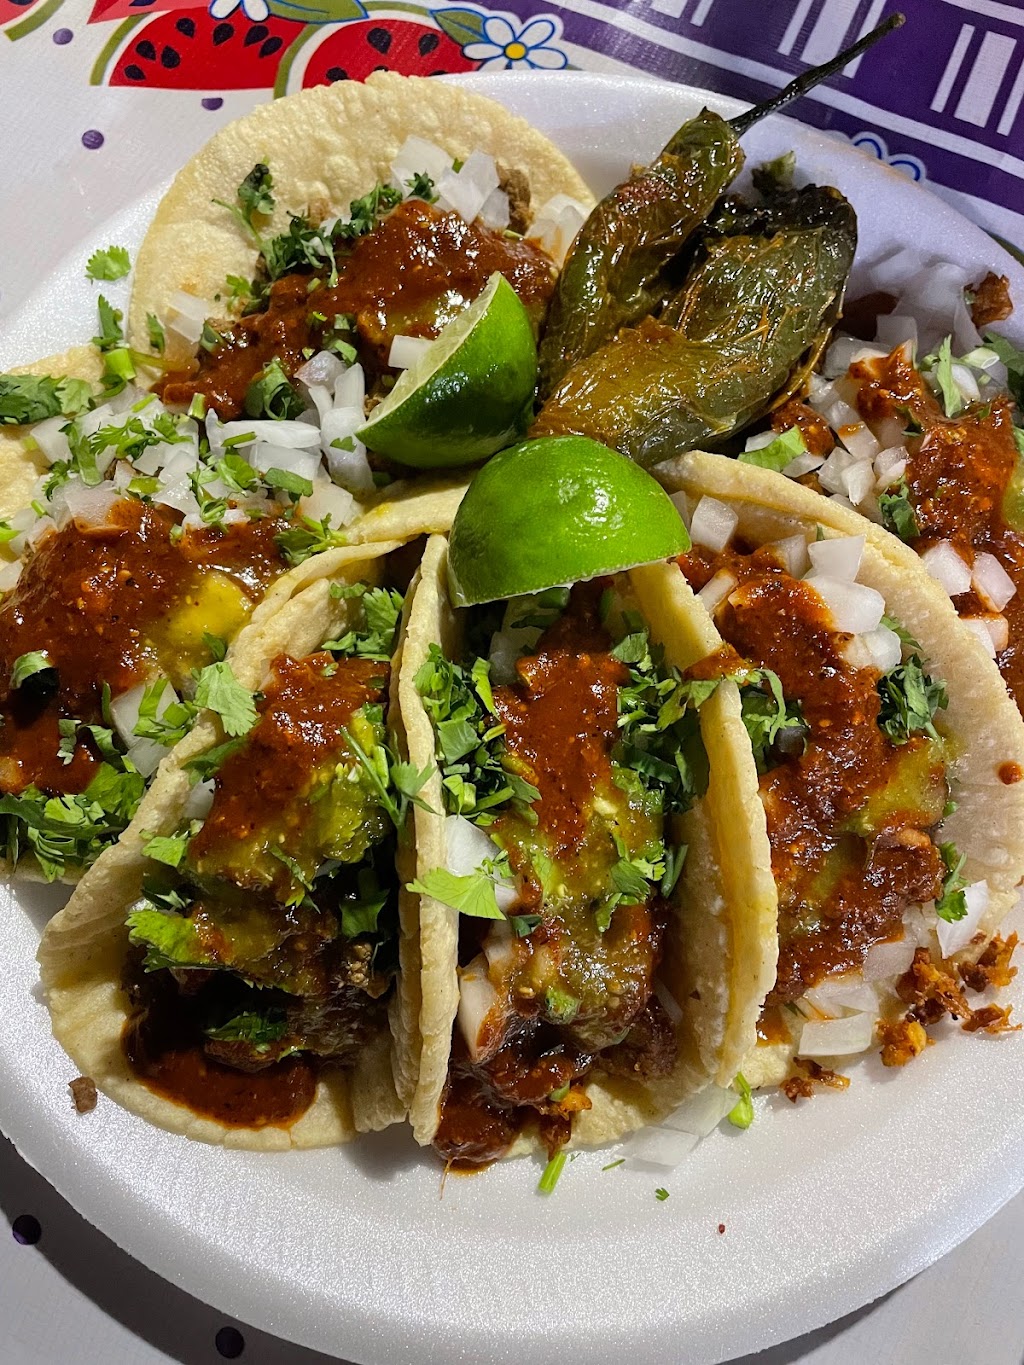 Mariella’s Tacos | 5220 W 102nd St, Los Angeles, CA 90045, USA | Phone: (310) 800-3647